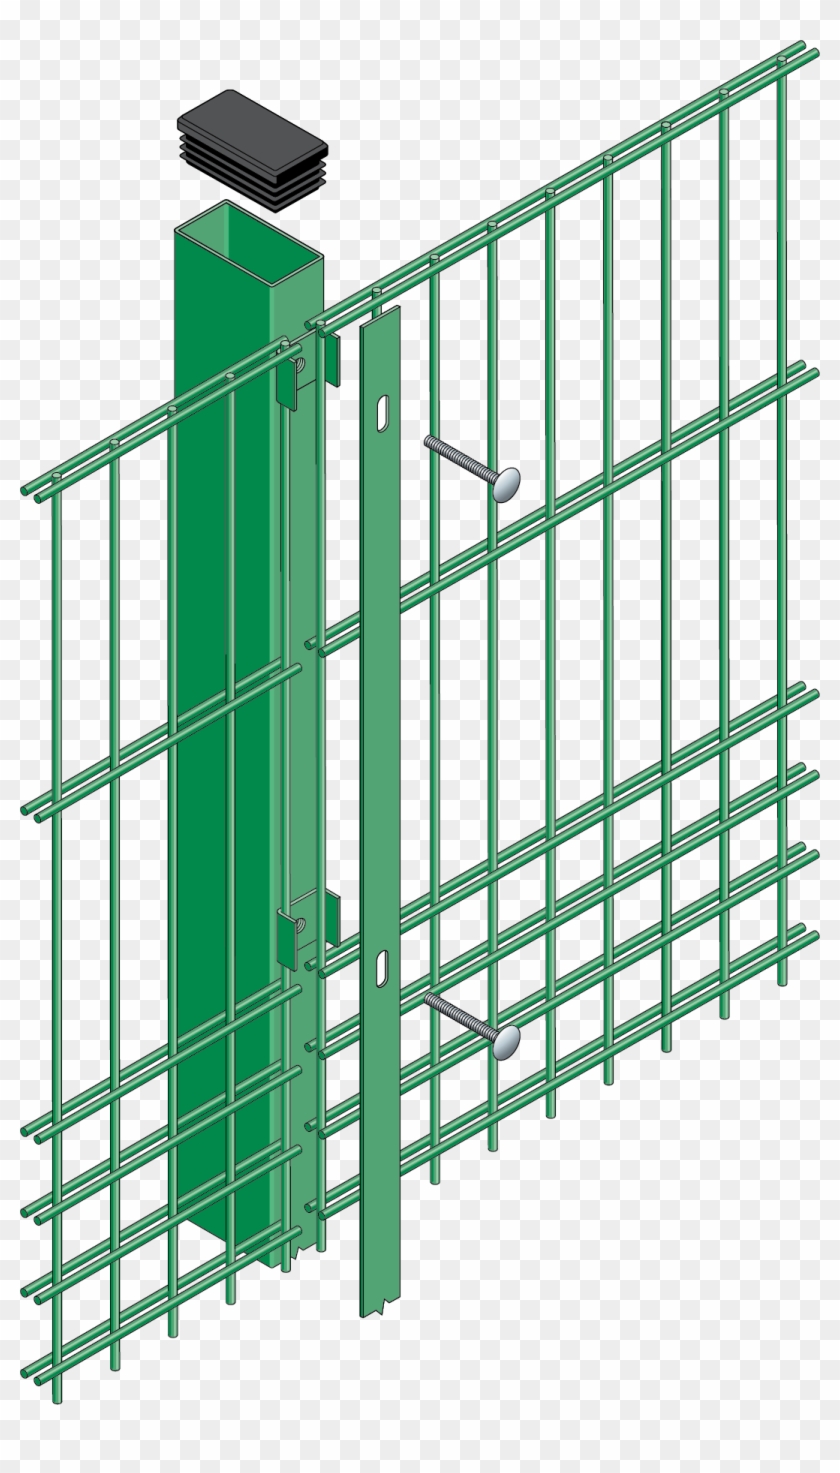 Tennis Court Fencing Dulok Rebound - Double Wire Fence Clipart #5475935